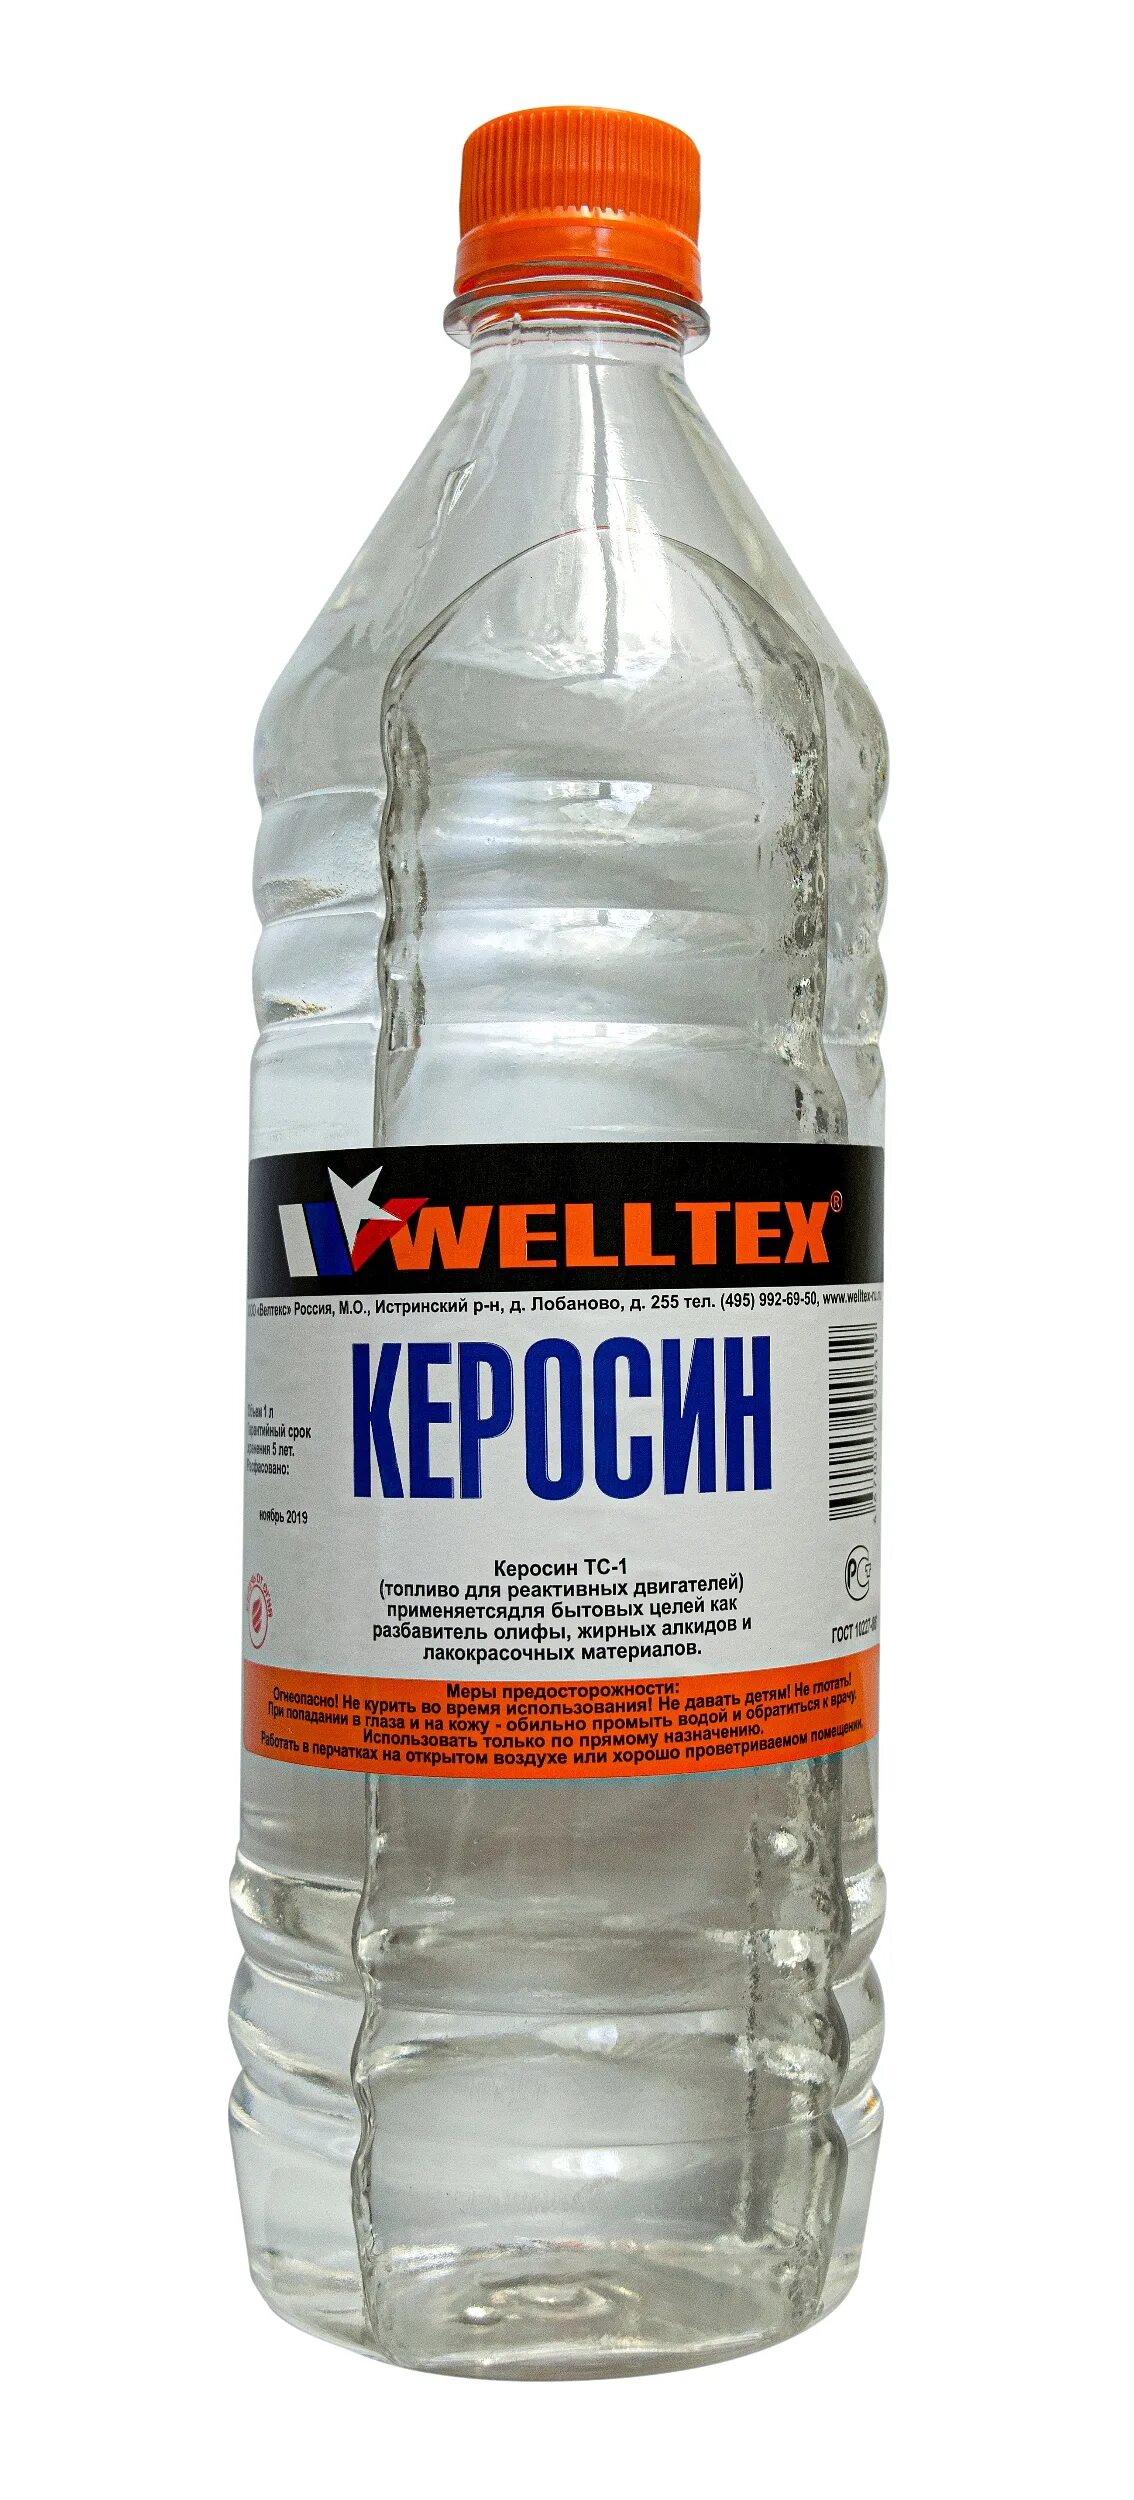 Welltex керосин (1л.). Керосин 1л Welltex Welltex 4670007990619. Сольвент Welltex нефтяной 1 л. Керосин ТС-1 ГОСТ. Е керосина